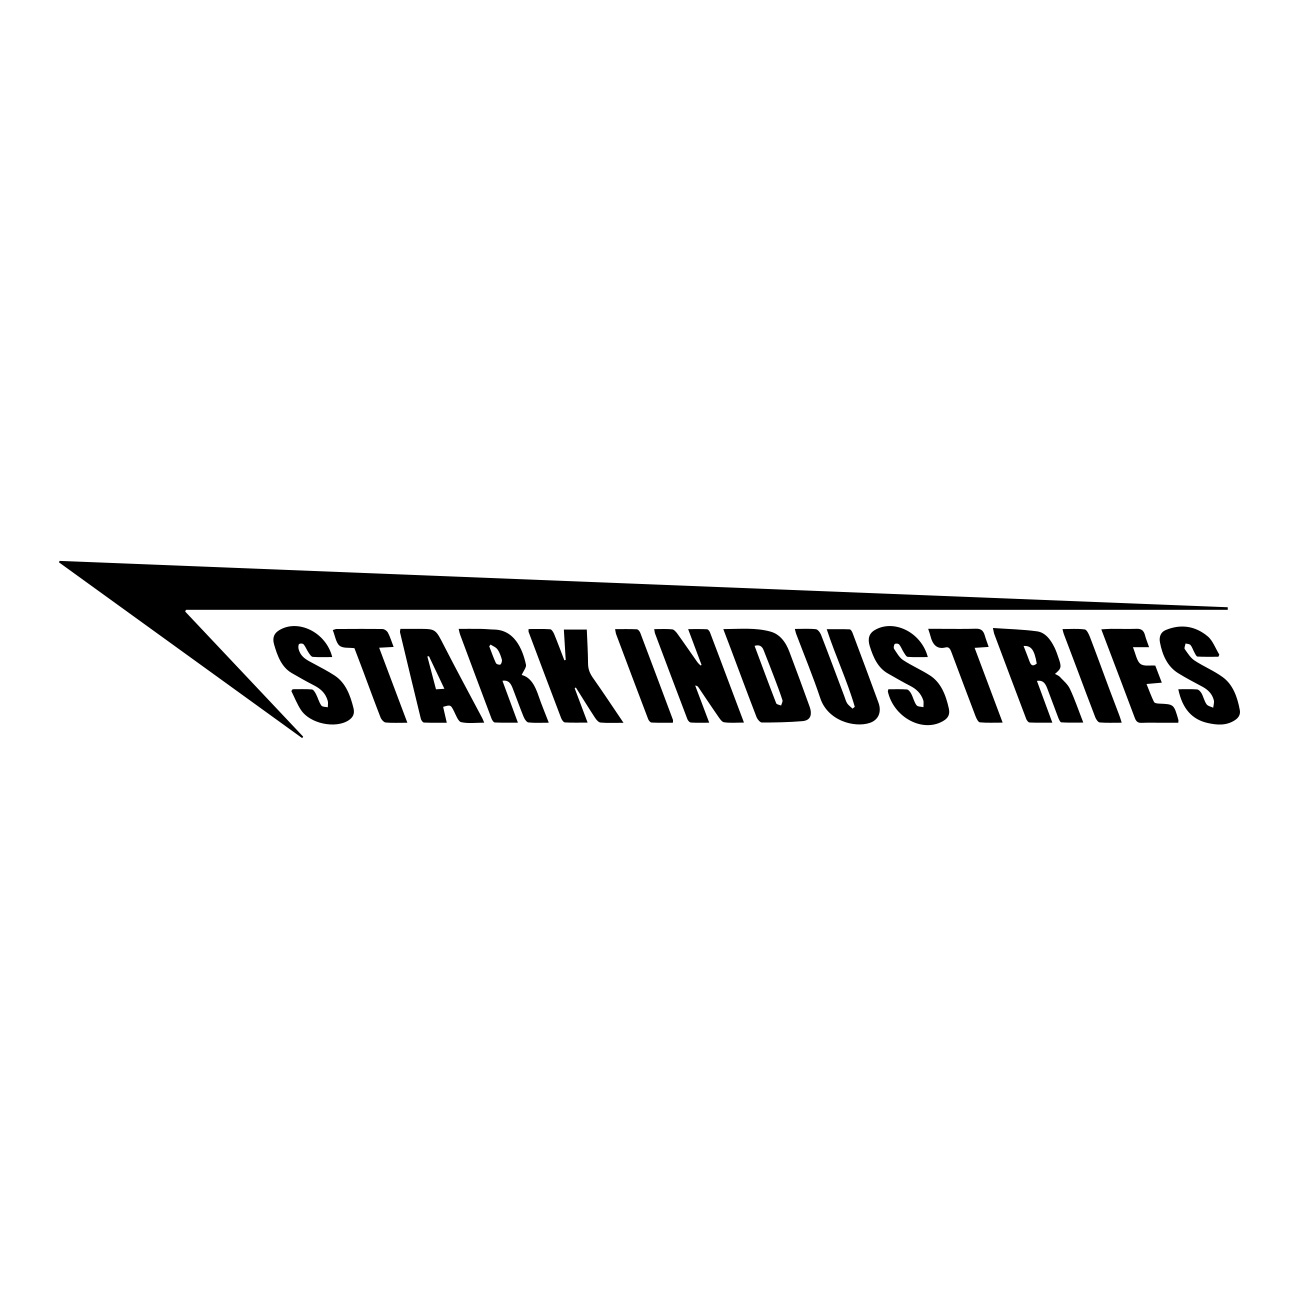 stark industries - Vis alle stickers FolieGejl.dk